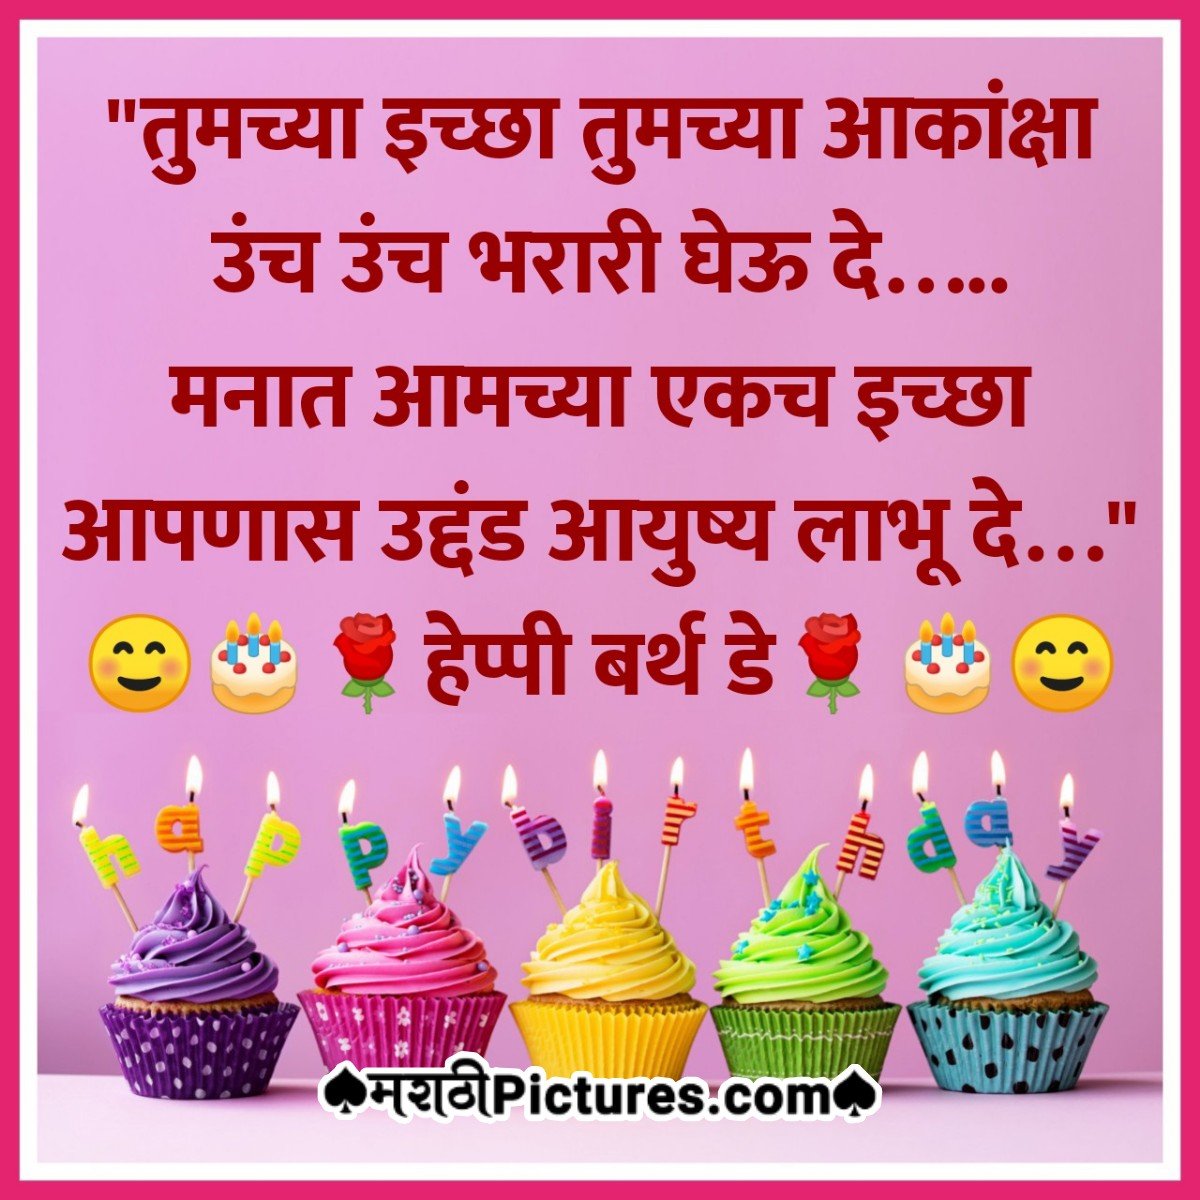 Happy Birthday Wishes In Marathi - MarathiPictures.com